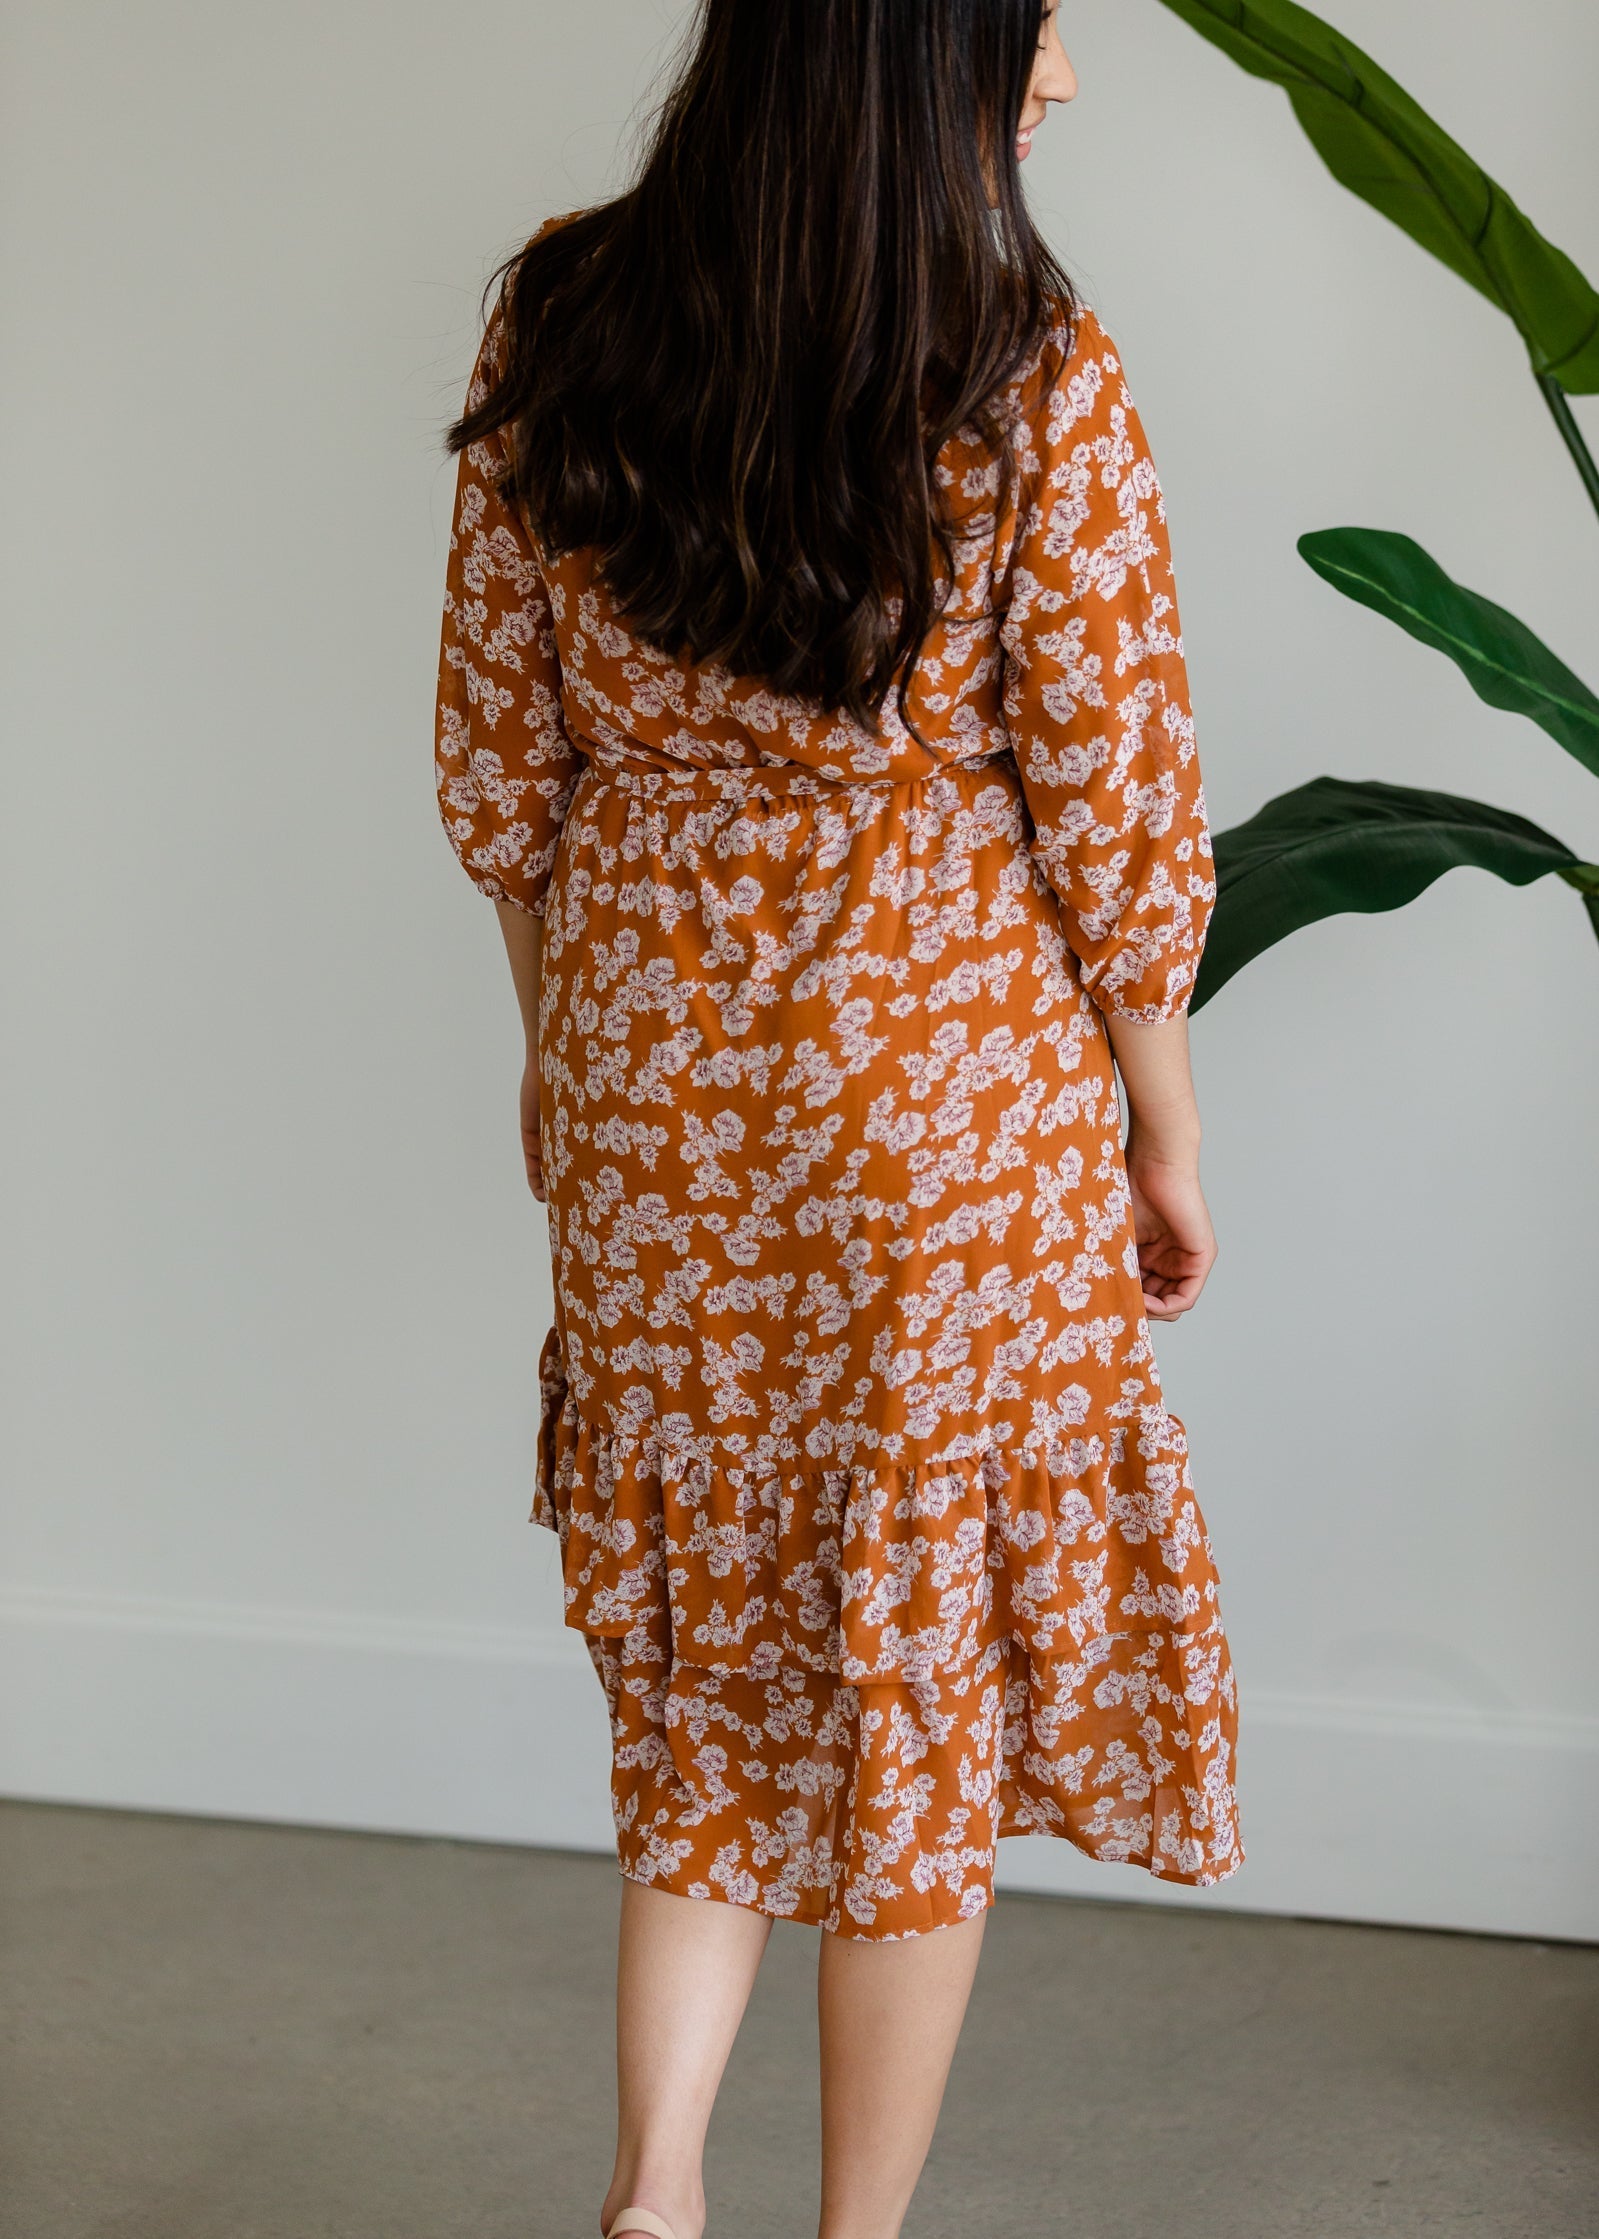 Burnt Orange Floral Midi Dress - FINAL SALE Dresses